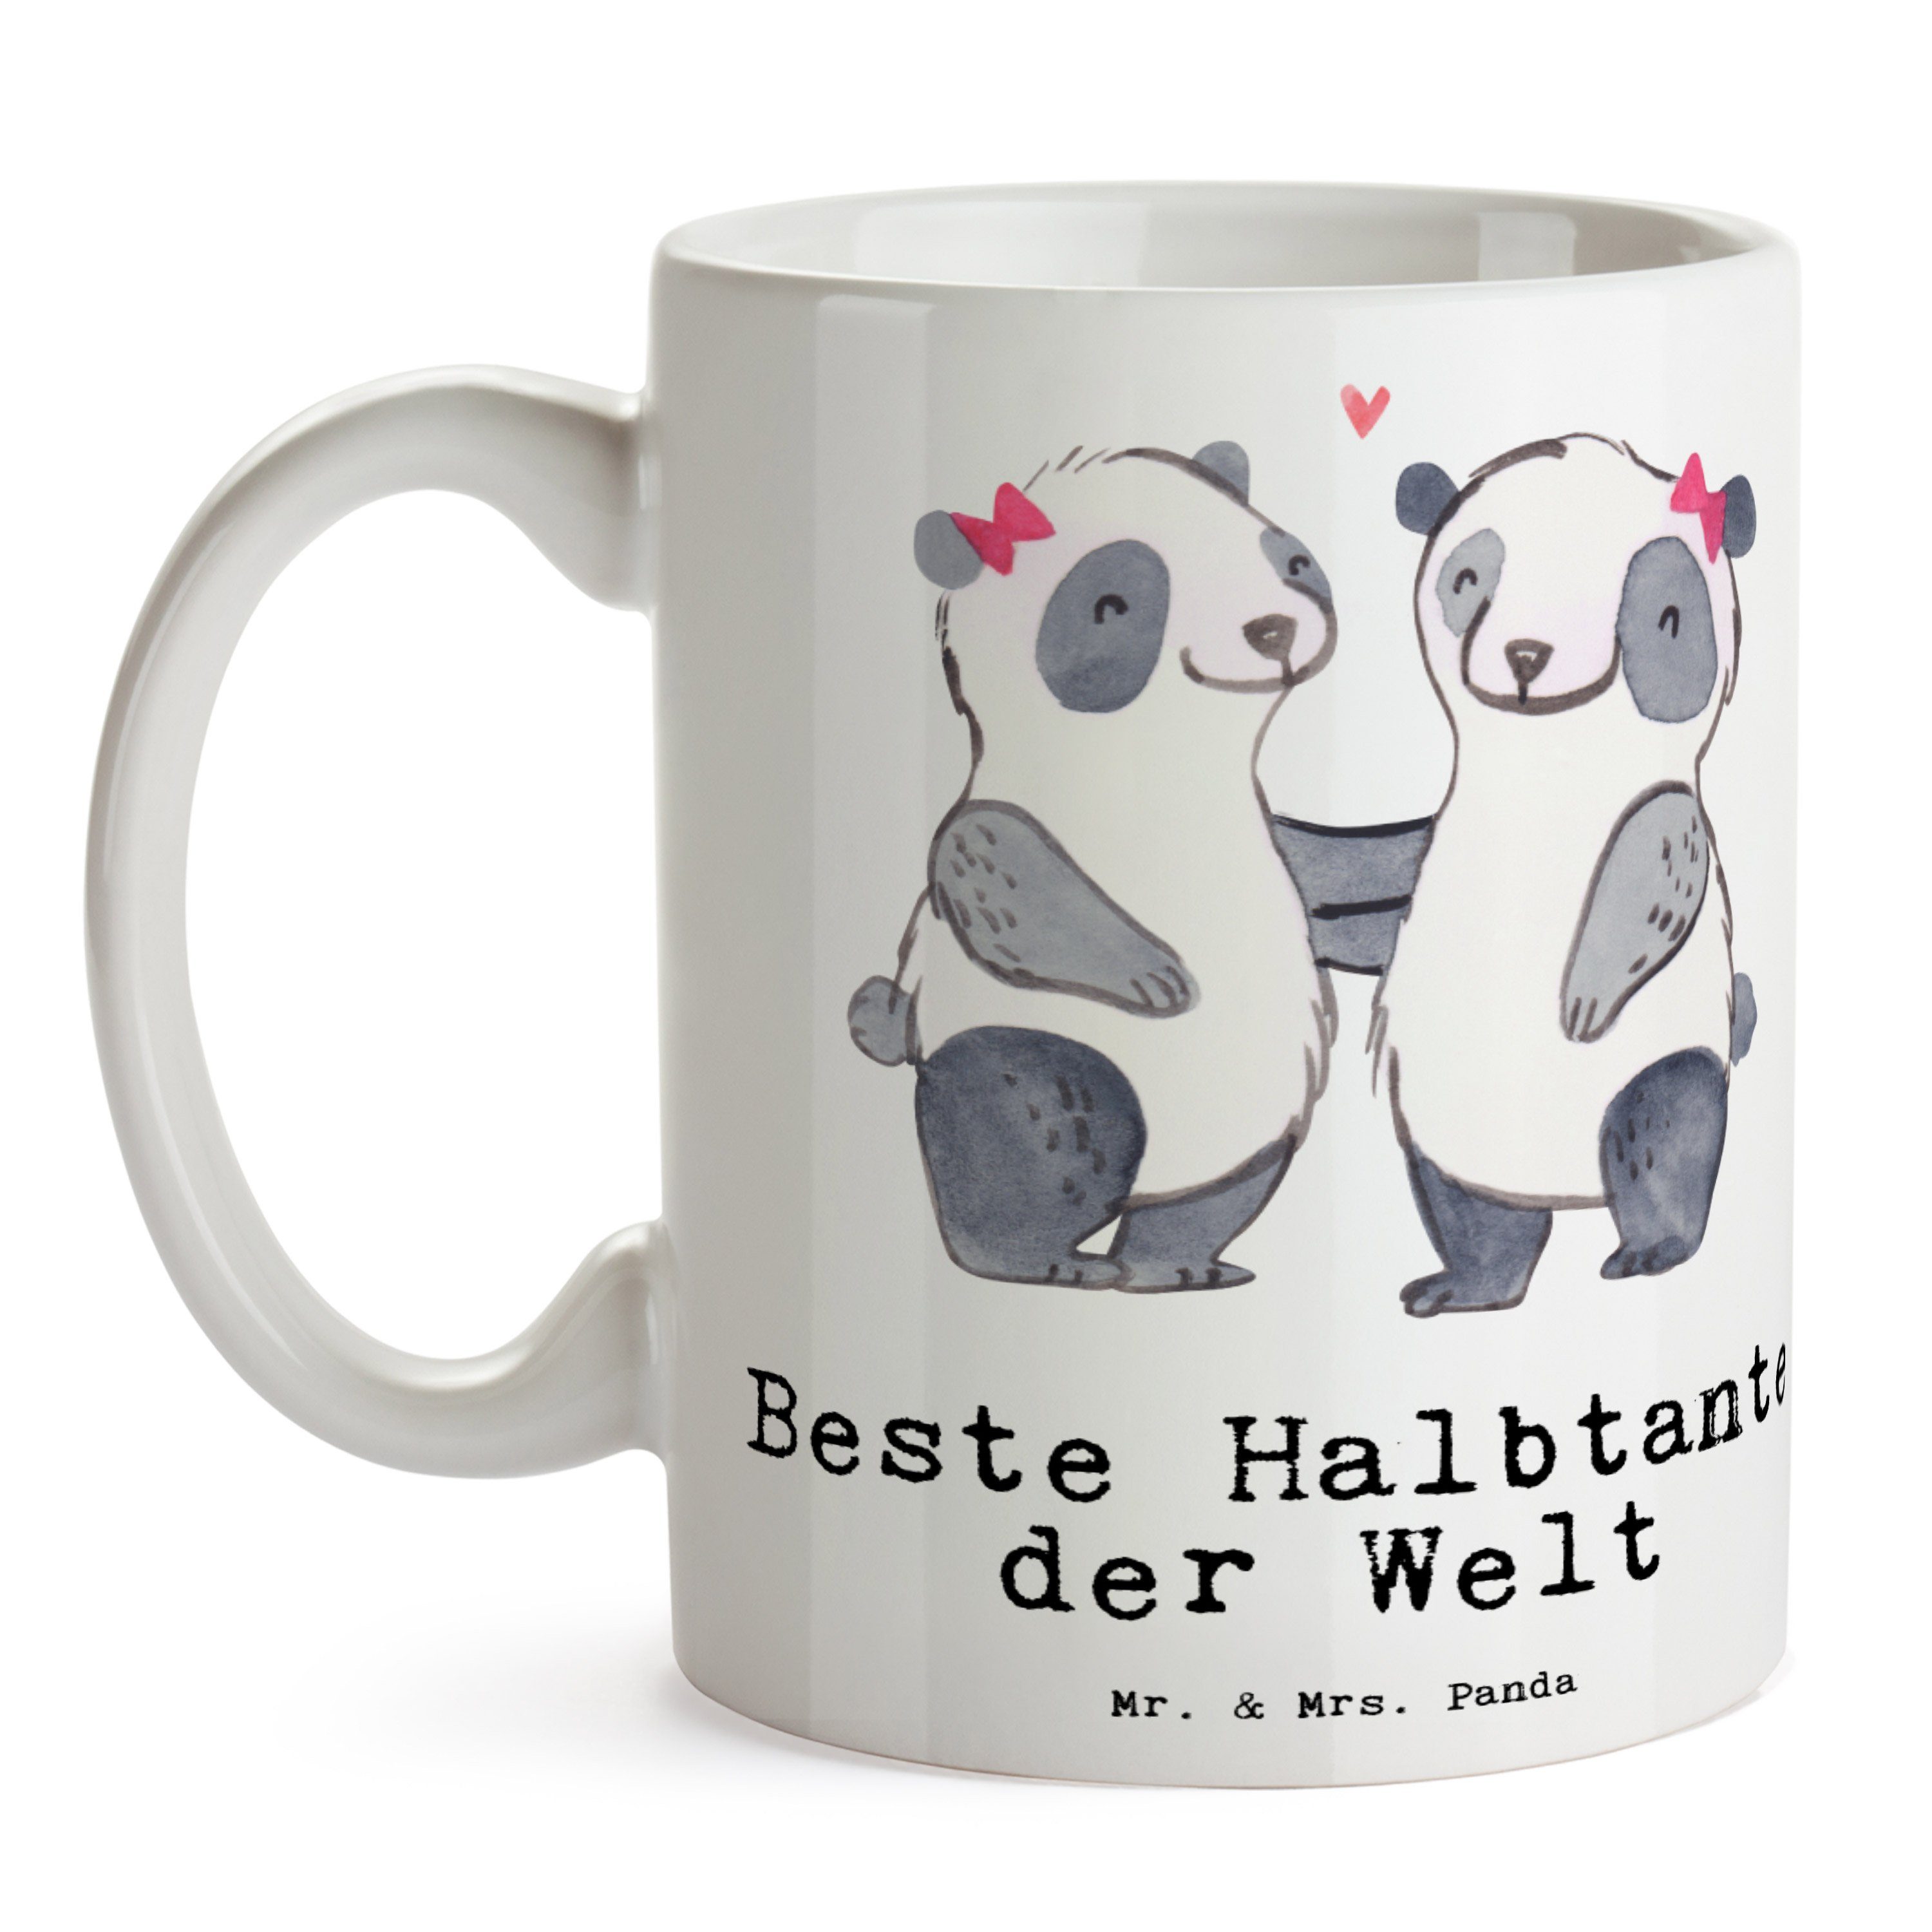 Mr. & Mrs. Panda Tasse Becher, Welt Geschenk, Büro, - - Stief, Schenken, Weiß Tee, Kaffeebecher, Familie, Beste Halbtante Mitbringsel, Keramik Panda Kaffeetasse, Geschenkidee, der